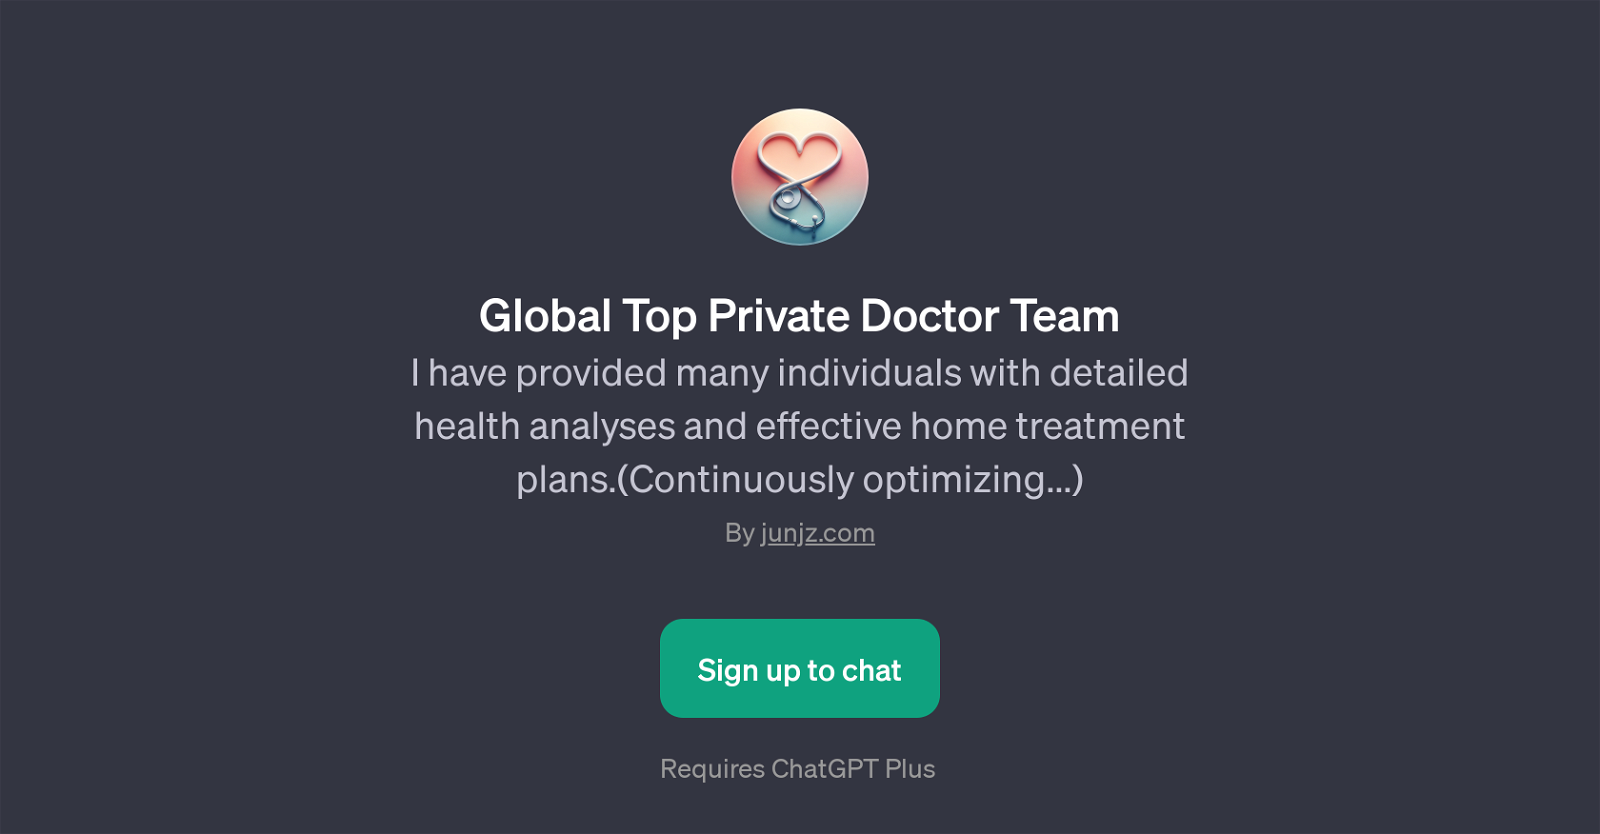 Global Top Private Doctor Team website